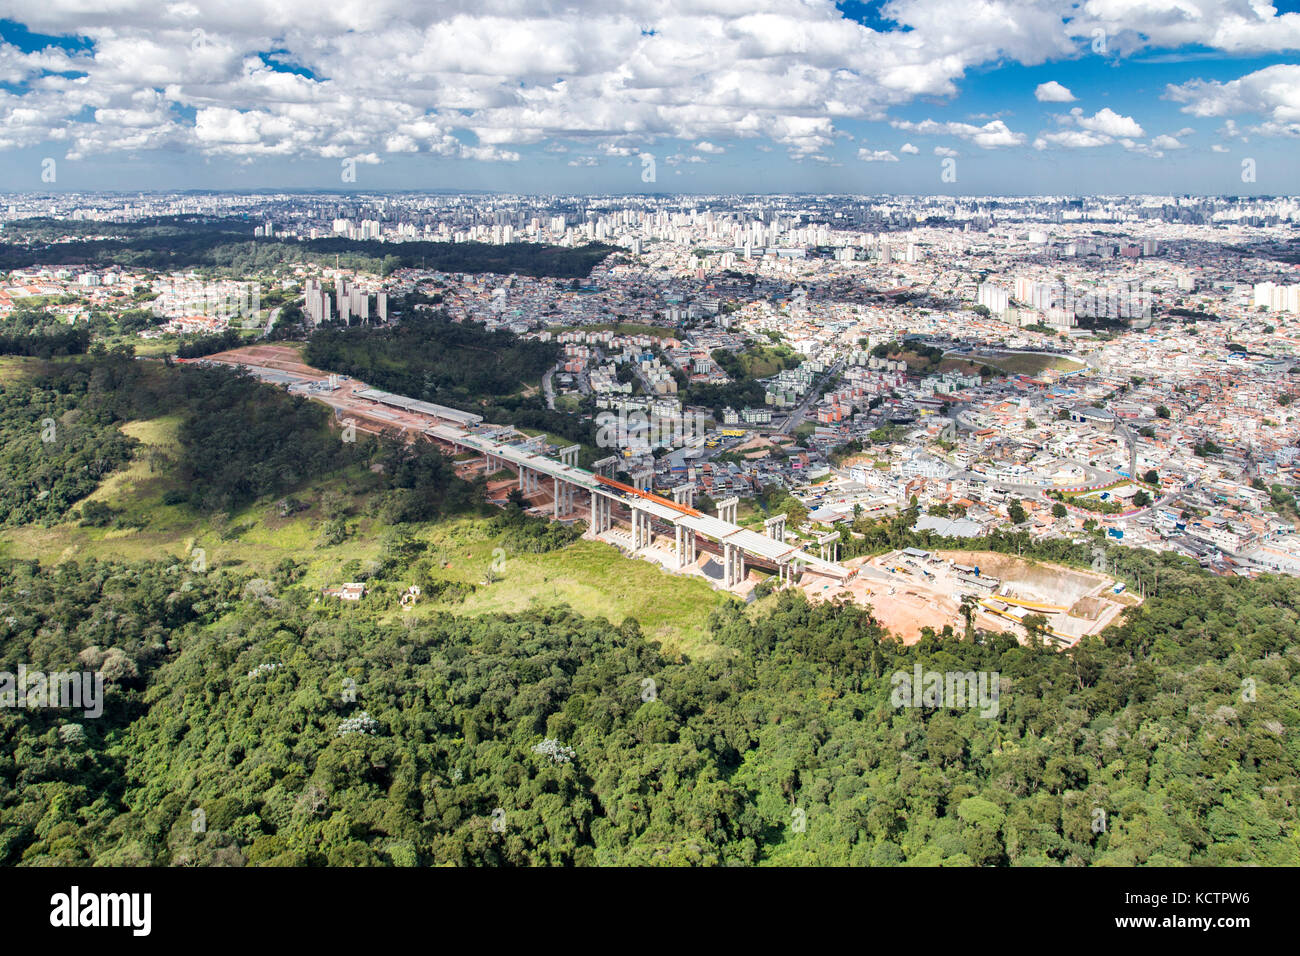 aerial view of Sao Paulo Metropolitan Region - Brazil. Highway around the city under construction - north section /rodoanel trecho norte em construção Stock Photo